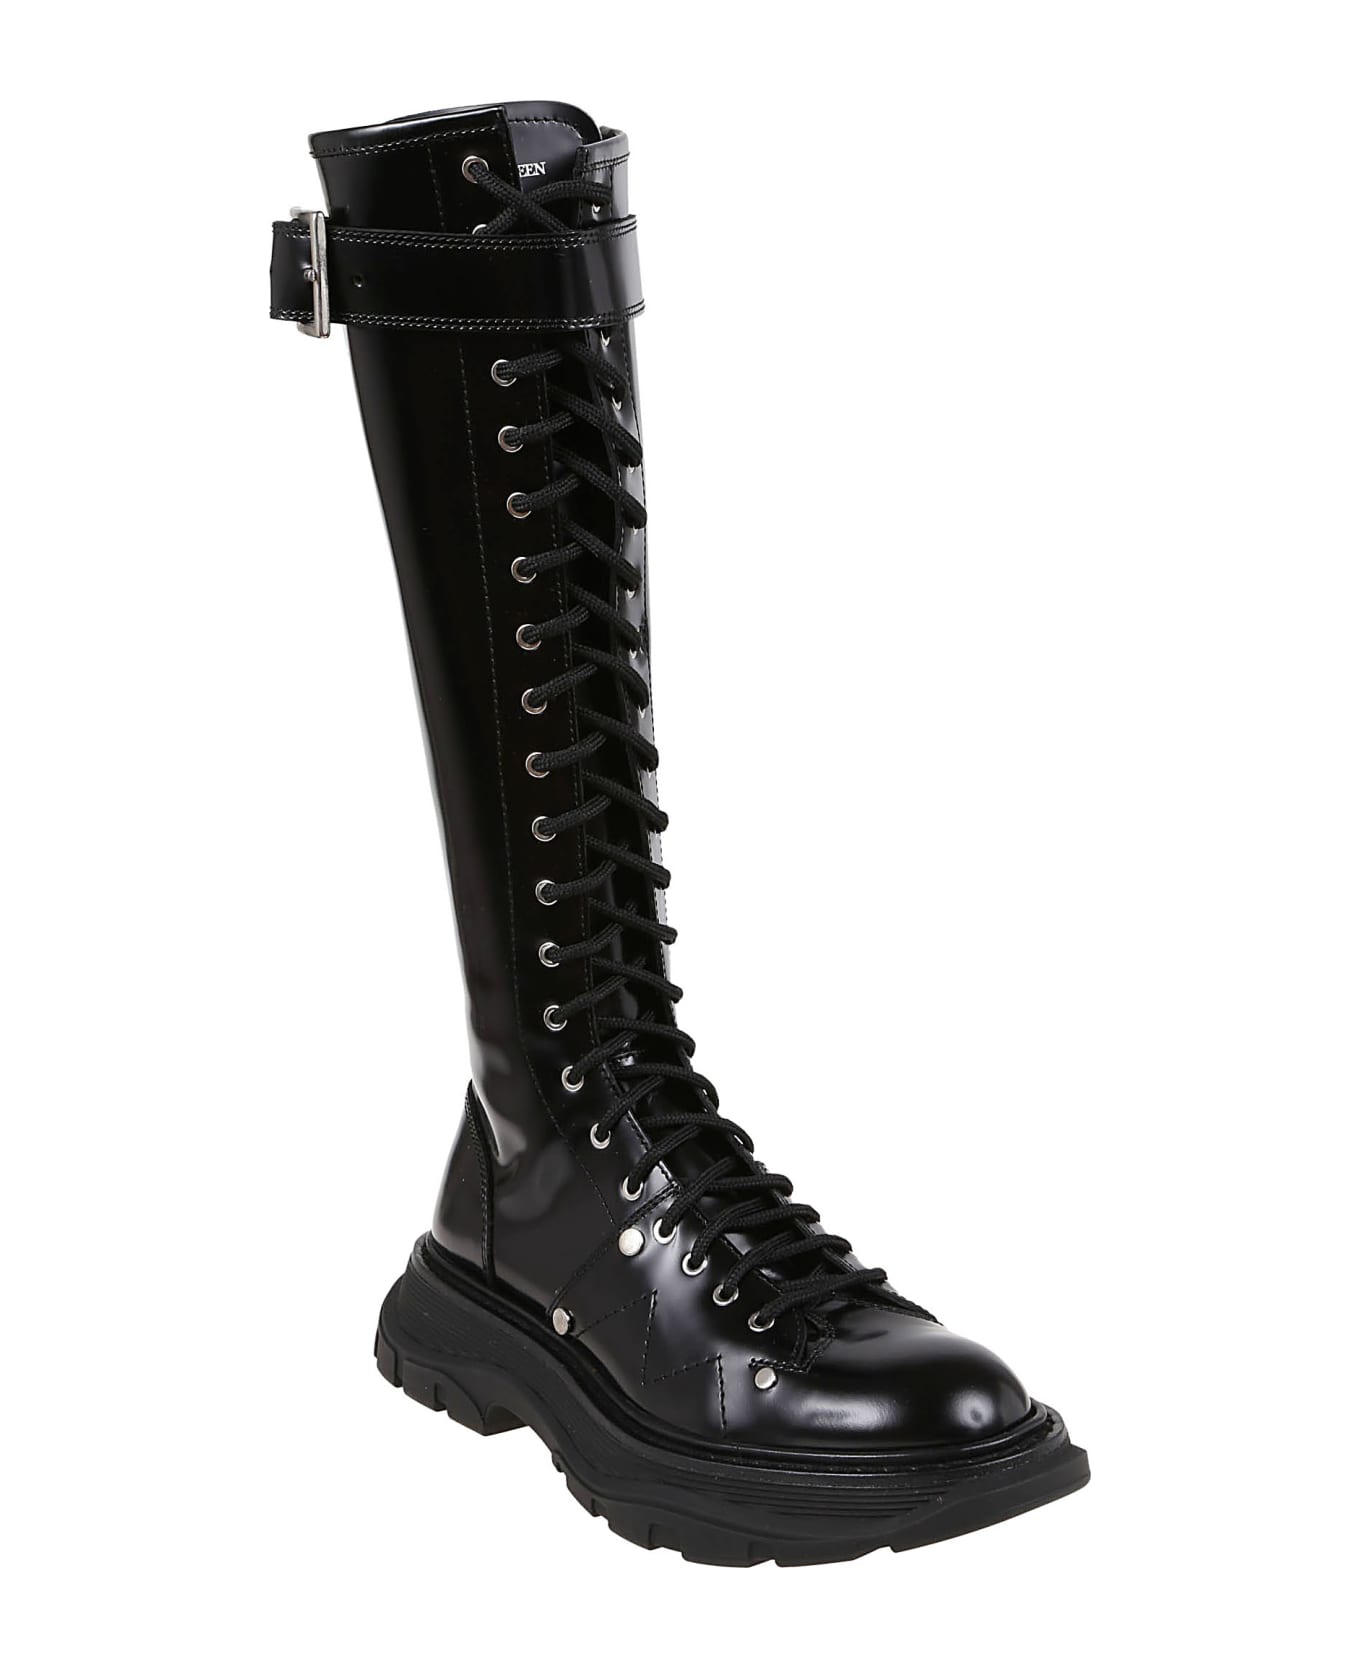 Alexander McQueen Boot Tread.le.s.rub. - Knee High Boots CAMPER Kiddo K900240-006 M Pink